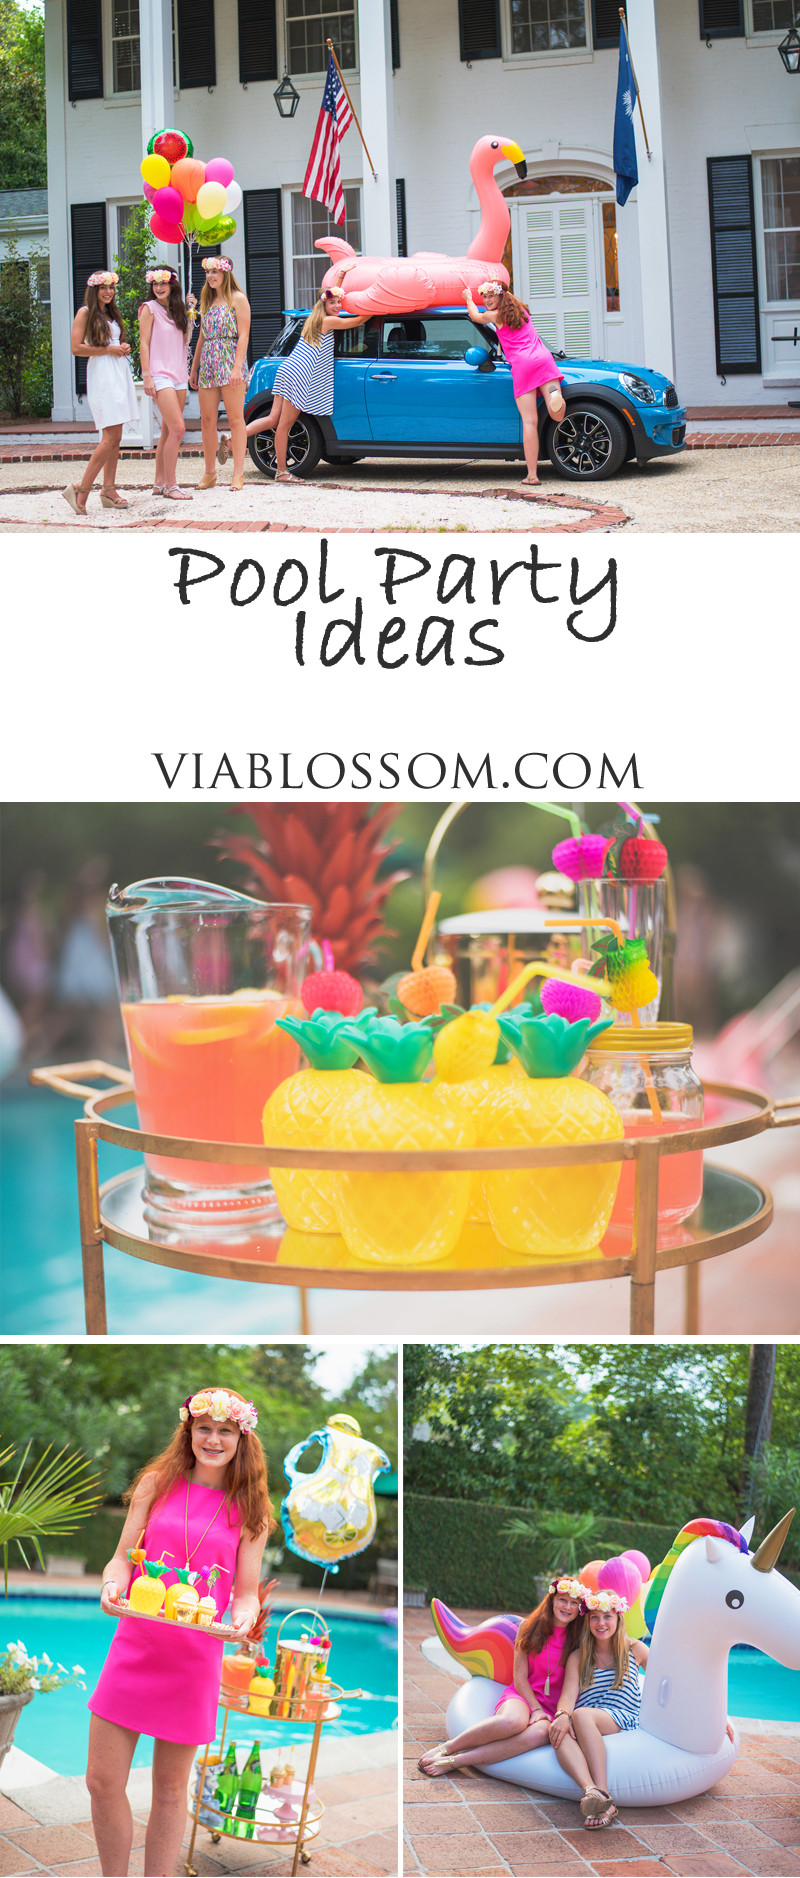 Pool Party Birthday Ideas
 Pool Party Ideas Via Blossom